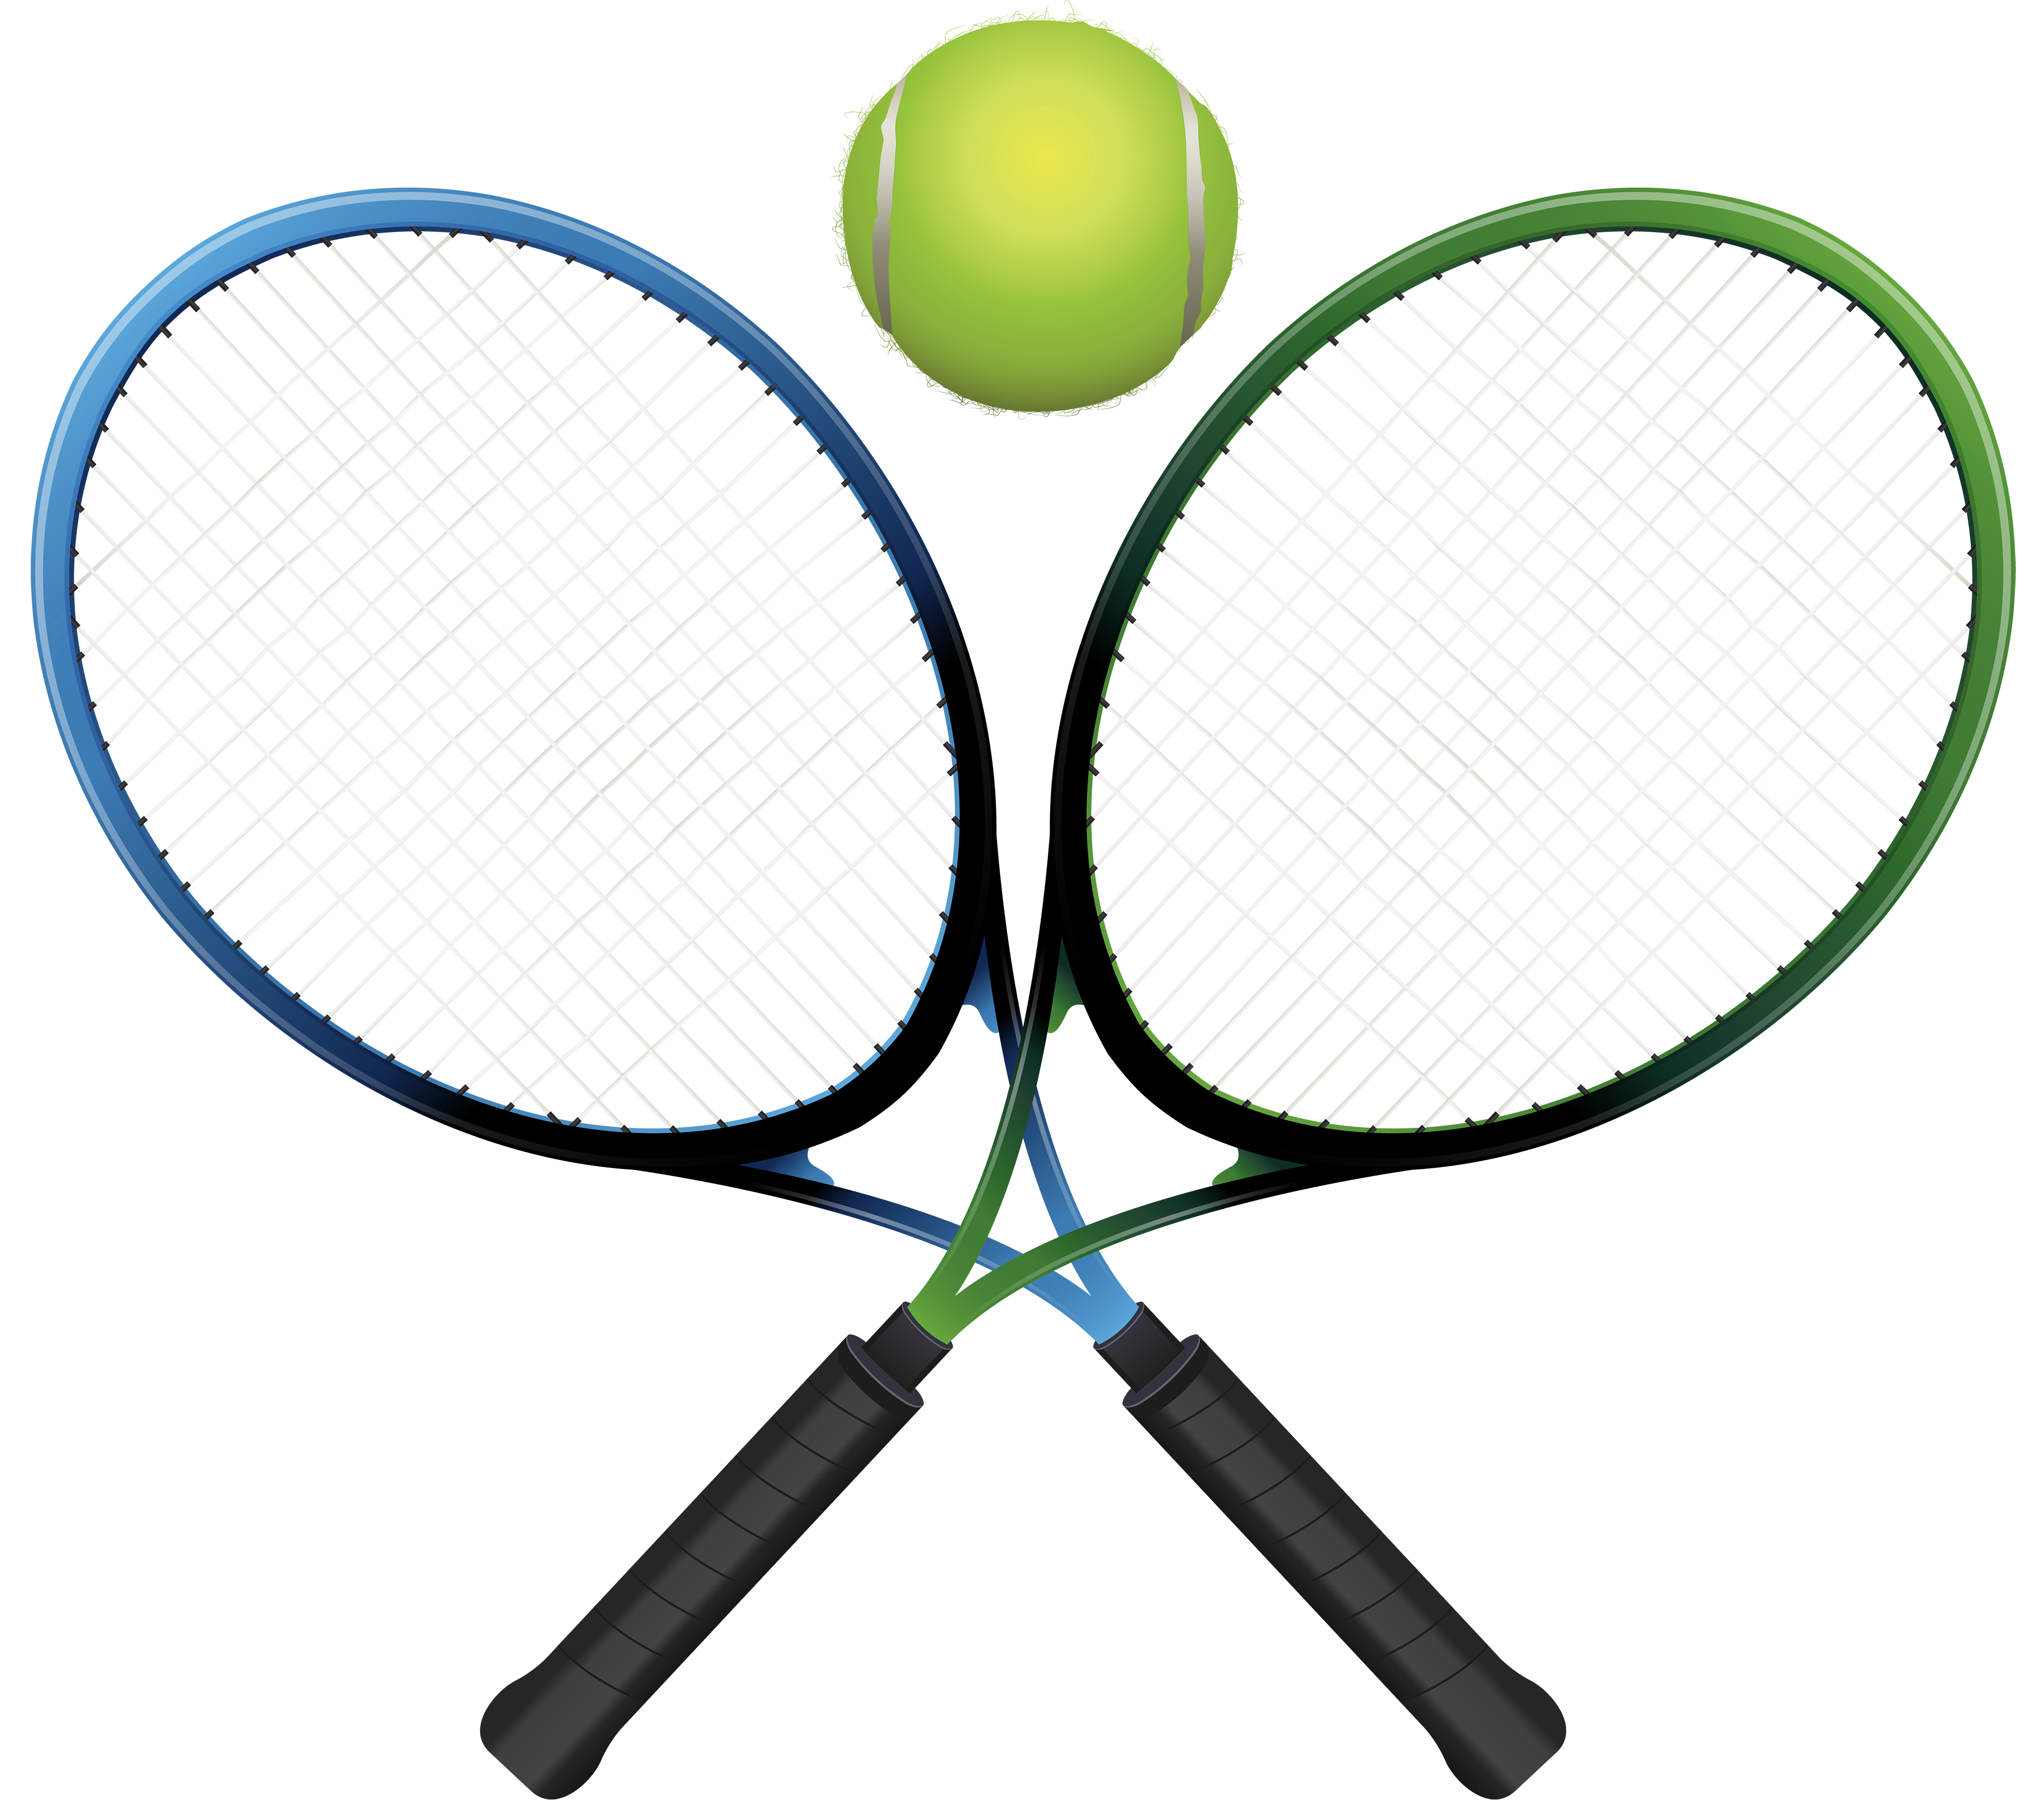 Tennis ball and racket clip art - ClipartFox